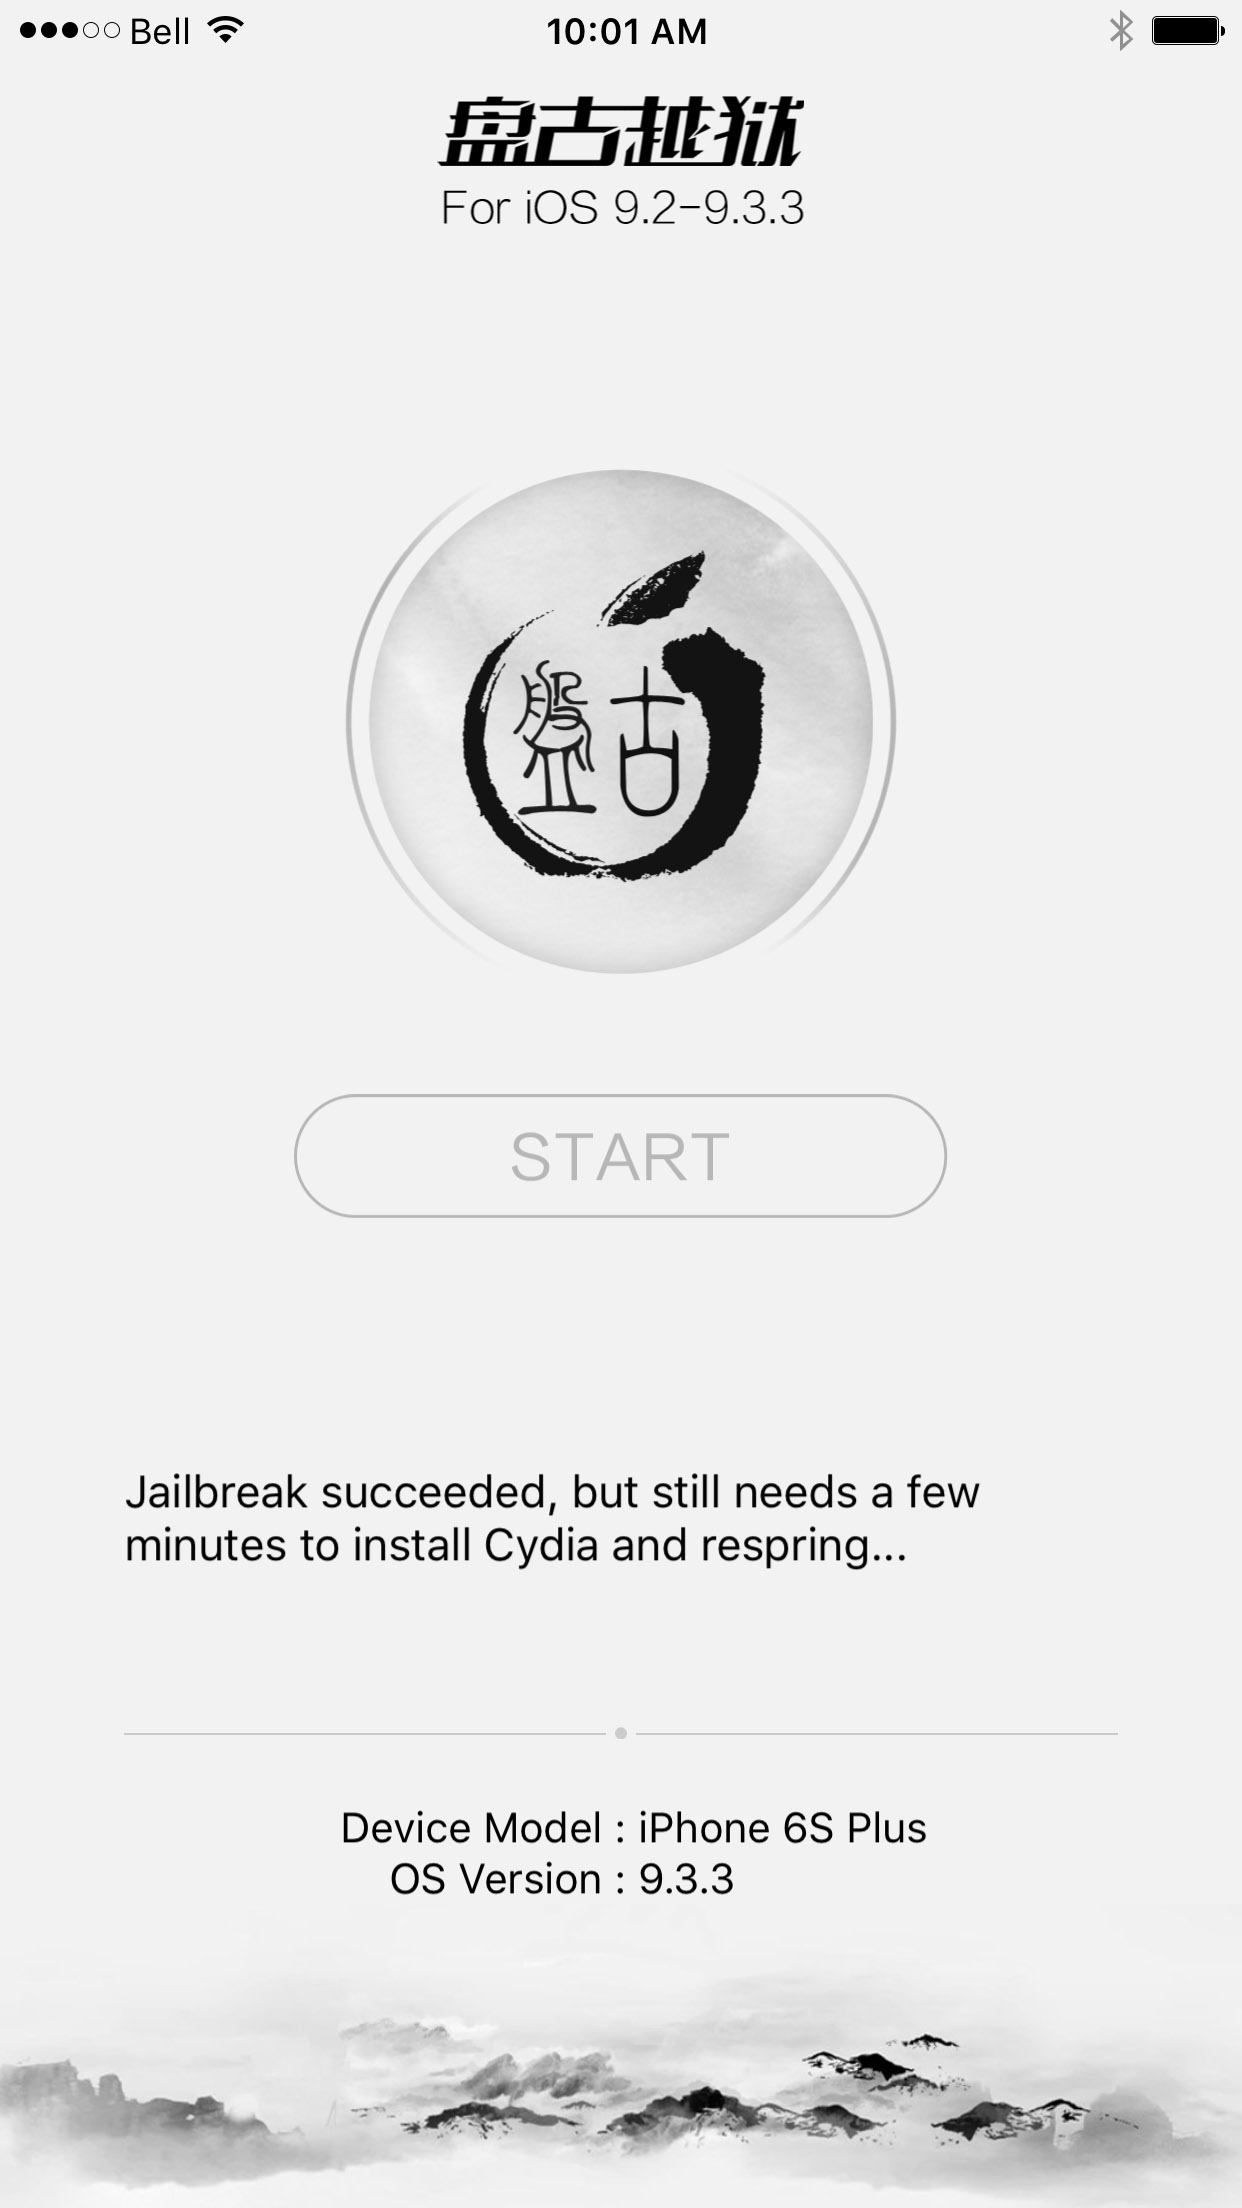 How to Jailbreak Your iPhone on iOS 9.3.3 Using Pangu and Cydia Impactor (Mac)